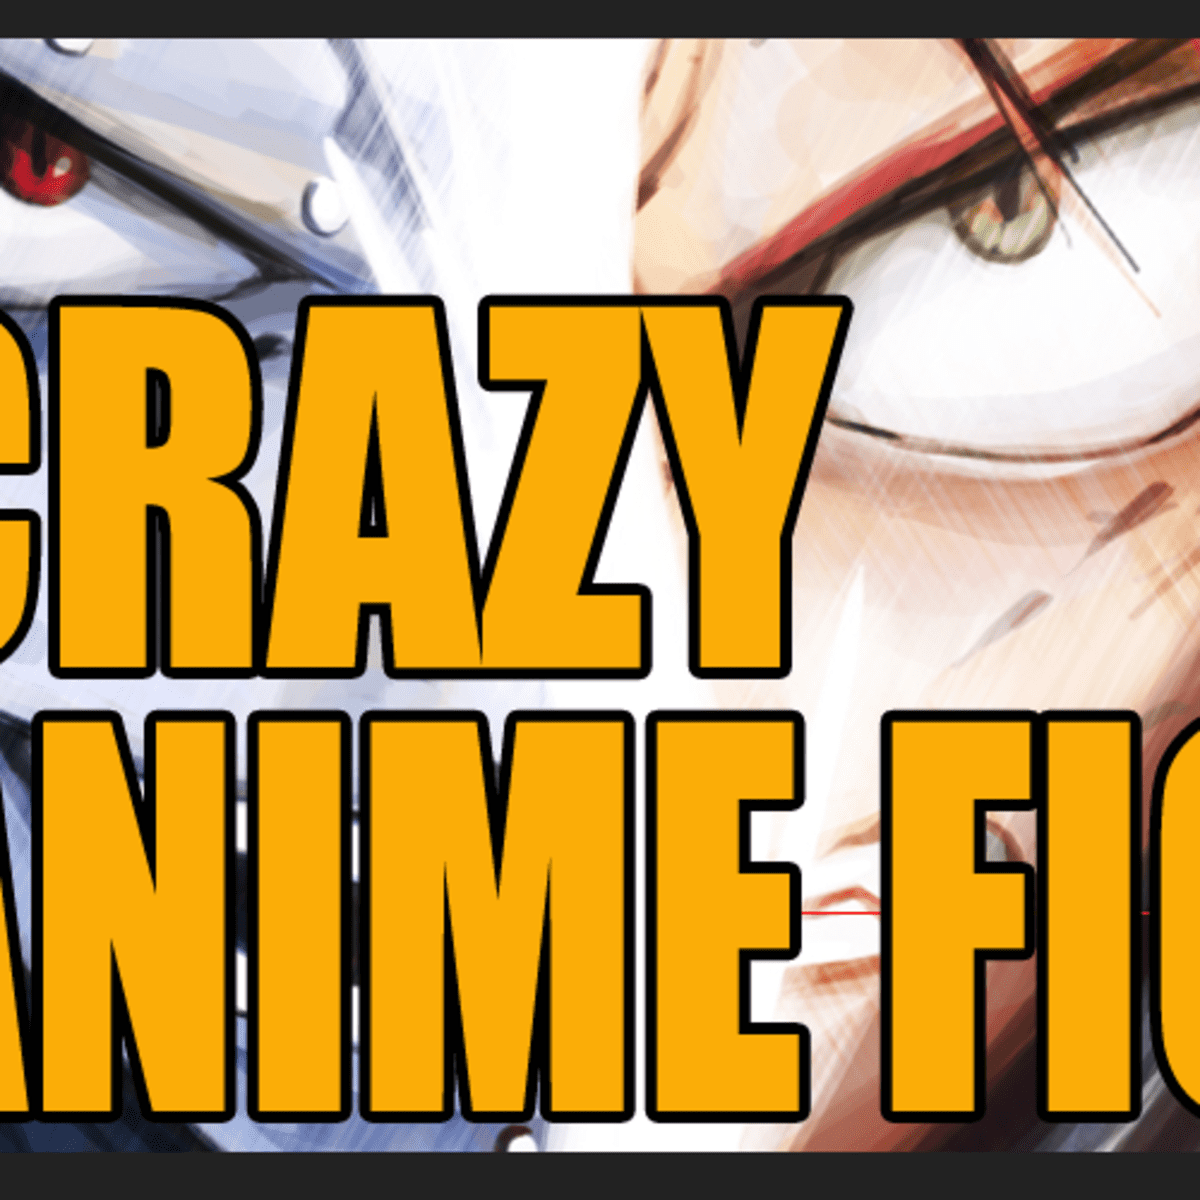 Crazy Anime Girl (Gatling Gun) by Yojama on DeviantArt